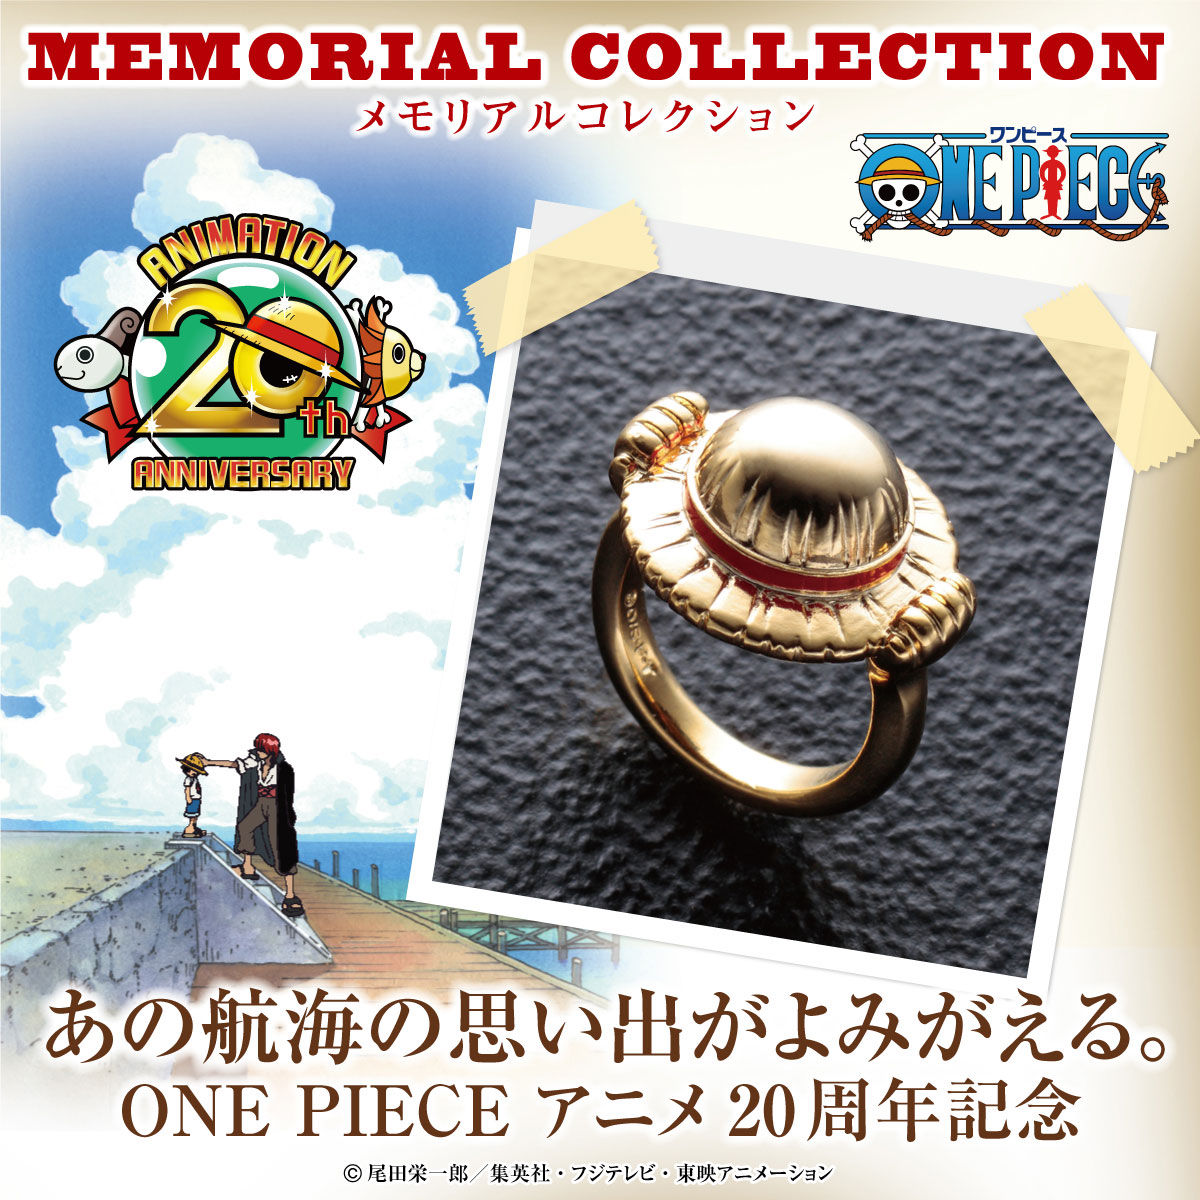 One Piece 20thメモリアルコレクション ワンピース 趣味